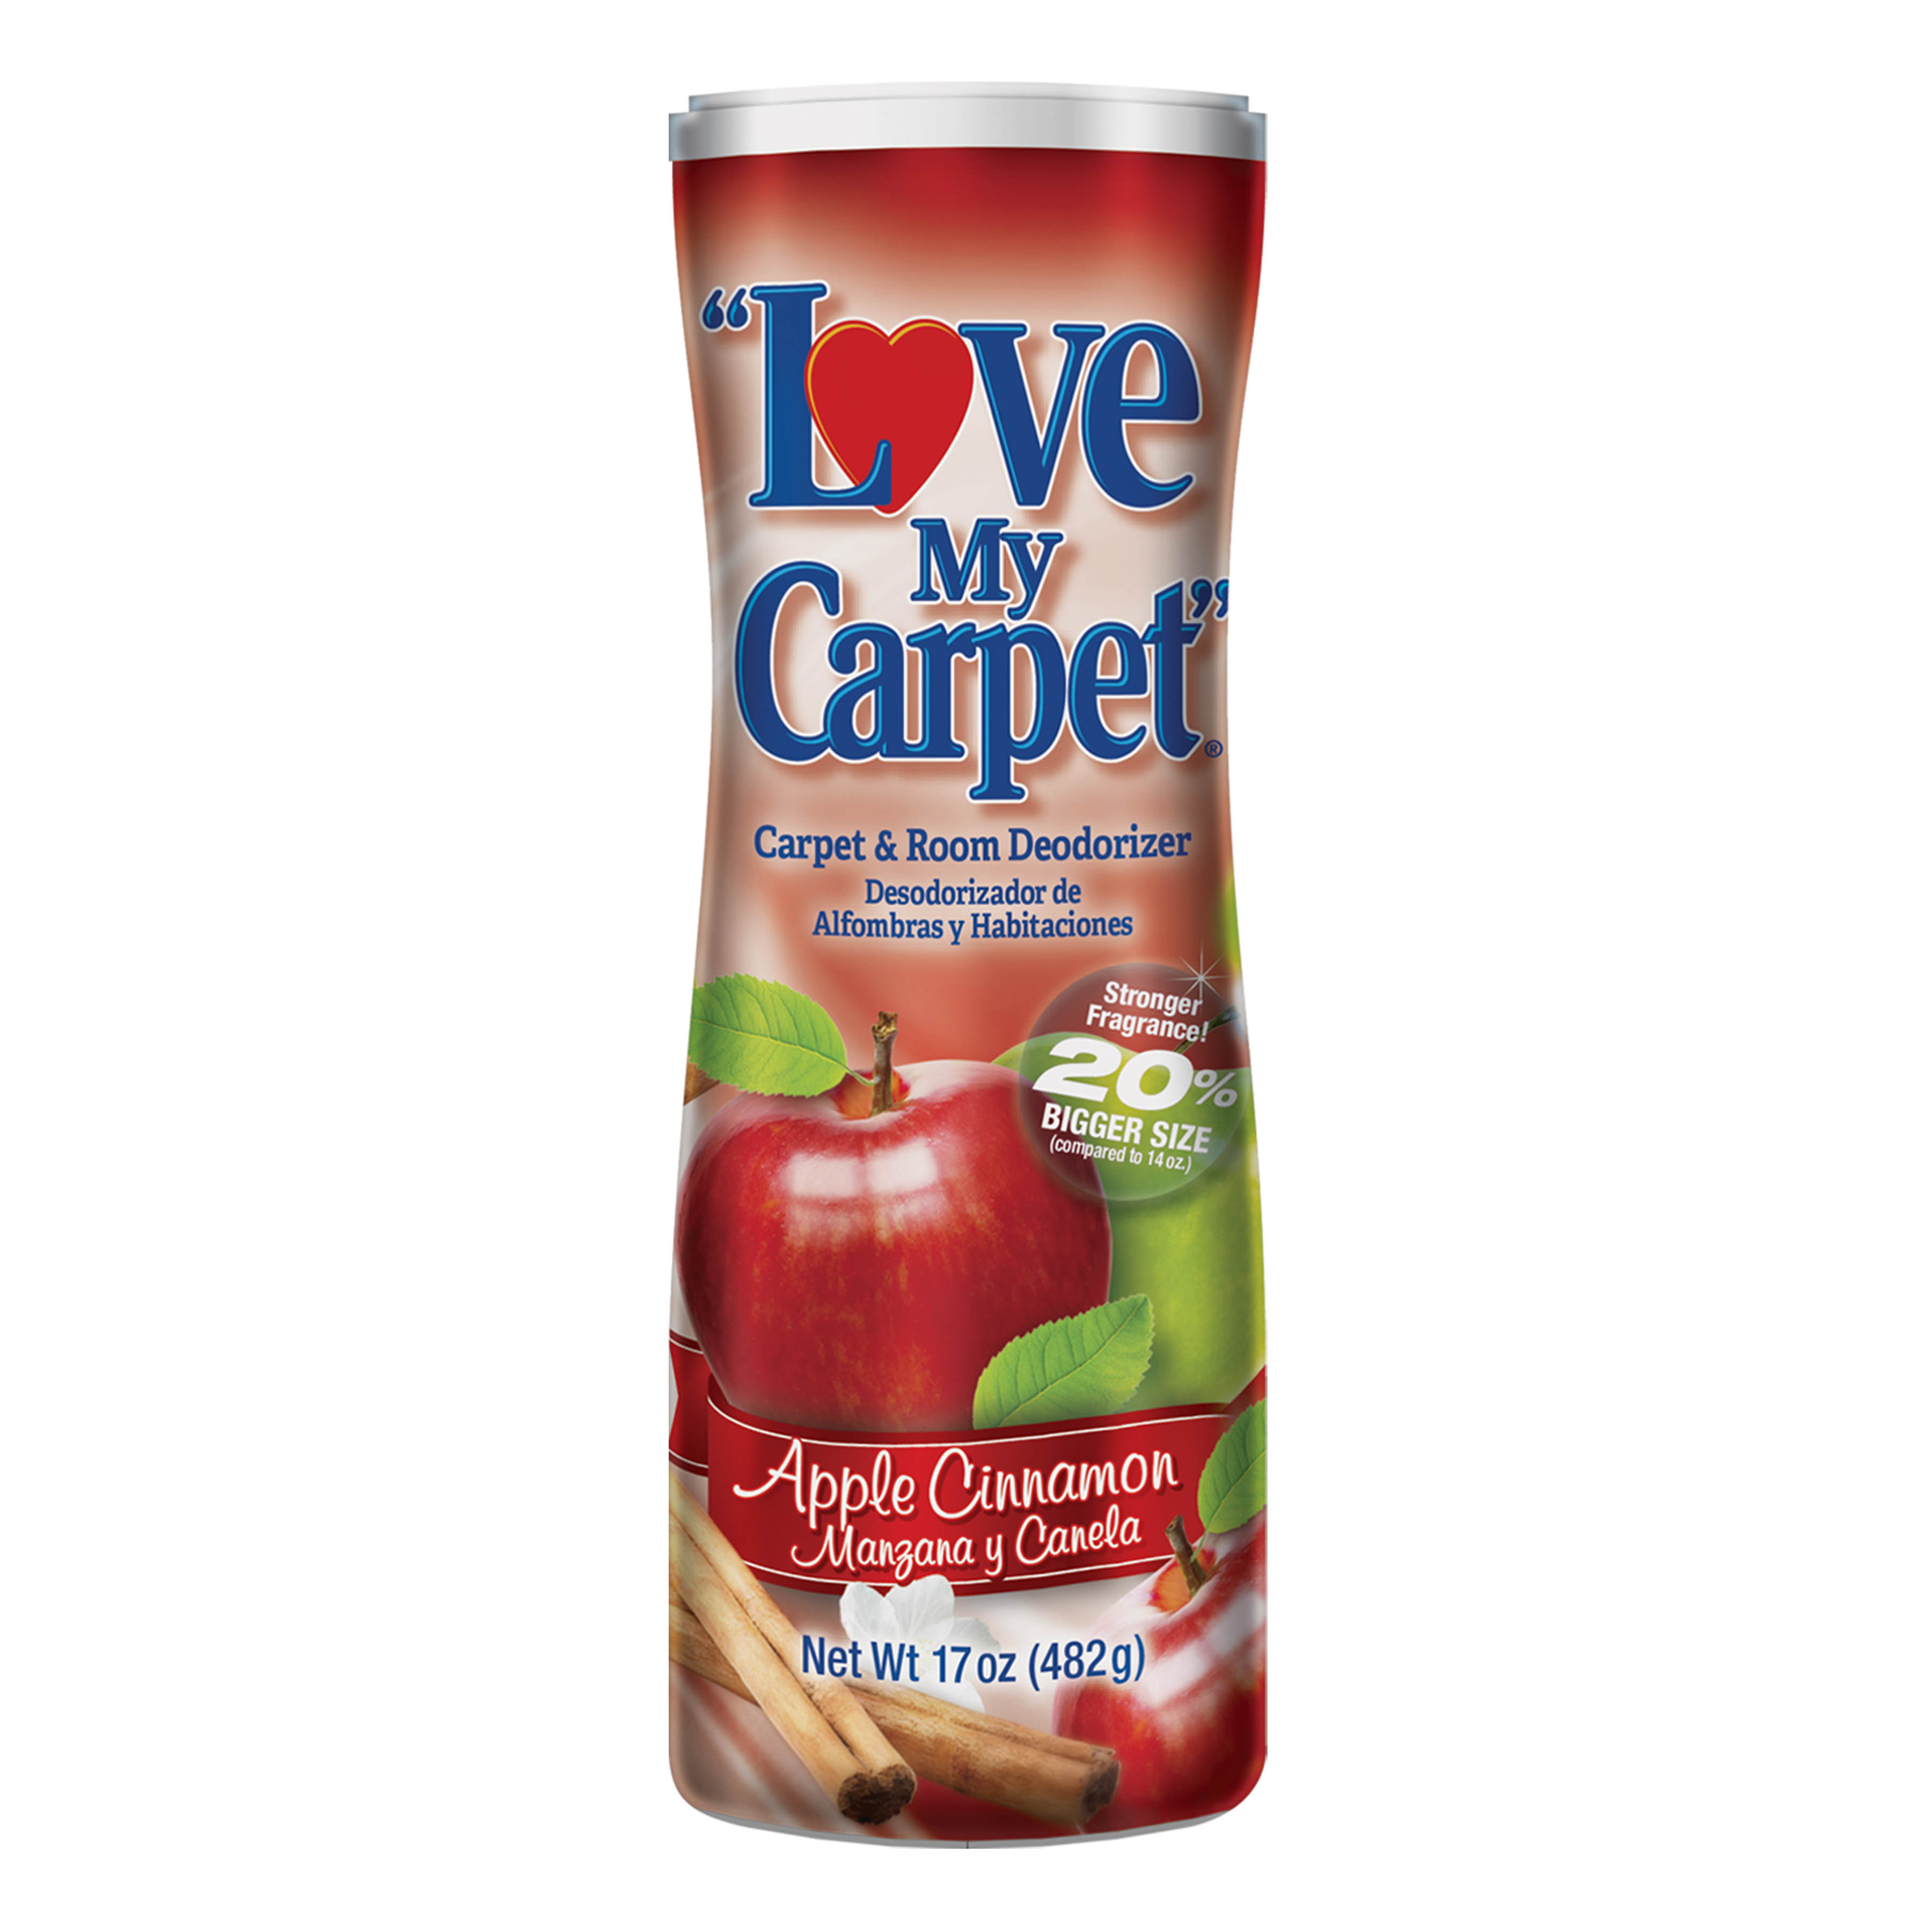 Love My Carpet, Apple Cinnamon